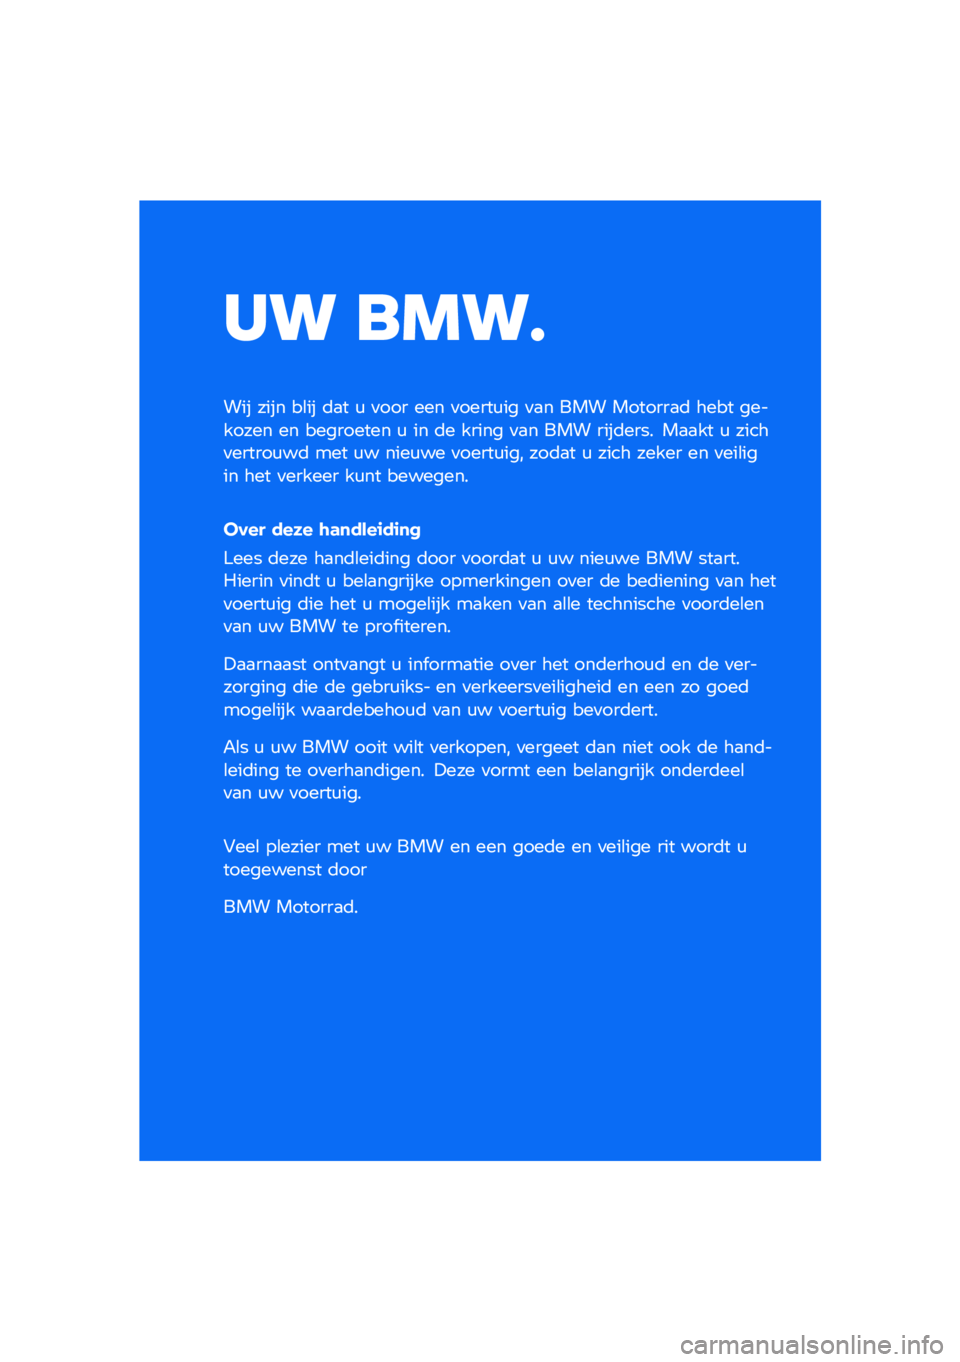 BMW MOTORRAD R NINE T URVAN G/S 2021  Handleiding (in Dutch) �� ����
��� ���� ��\b�� �	�
� �\f �
��� ��� �
�����\f�� �
�
� ��� �������
�	 ���� �������� �� ��������� �\f �� �	� ����� �
�
� �